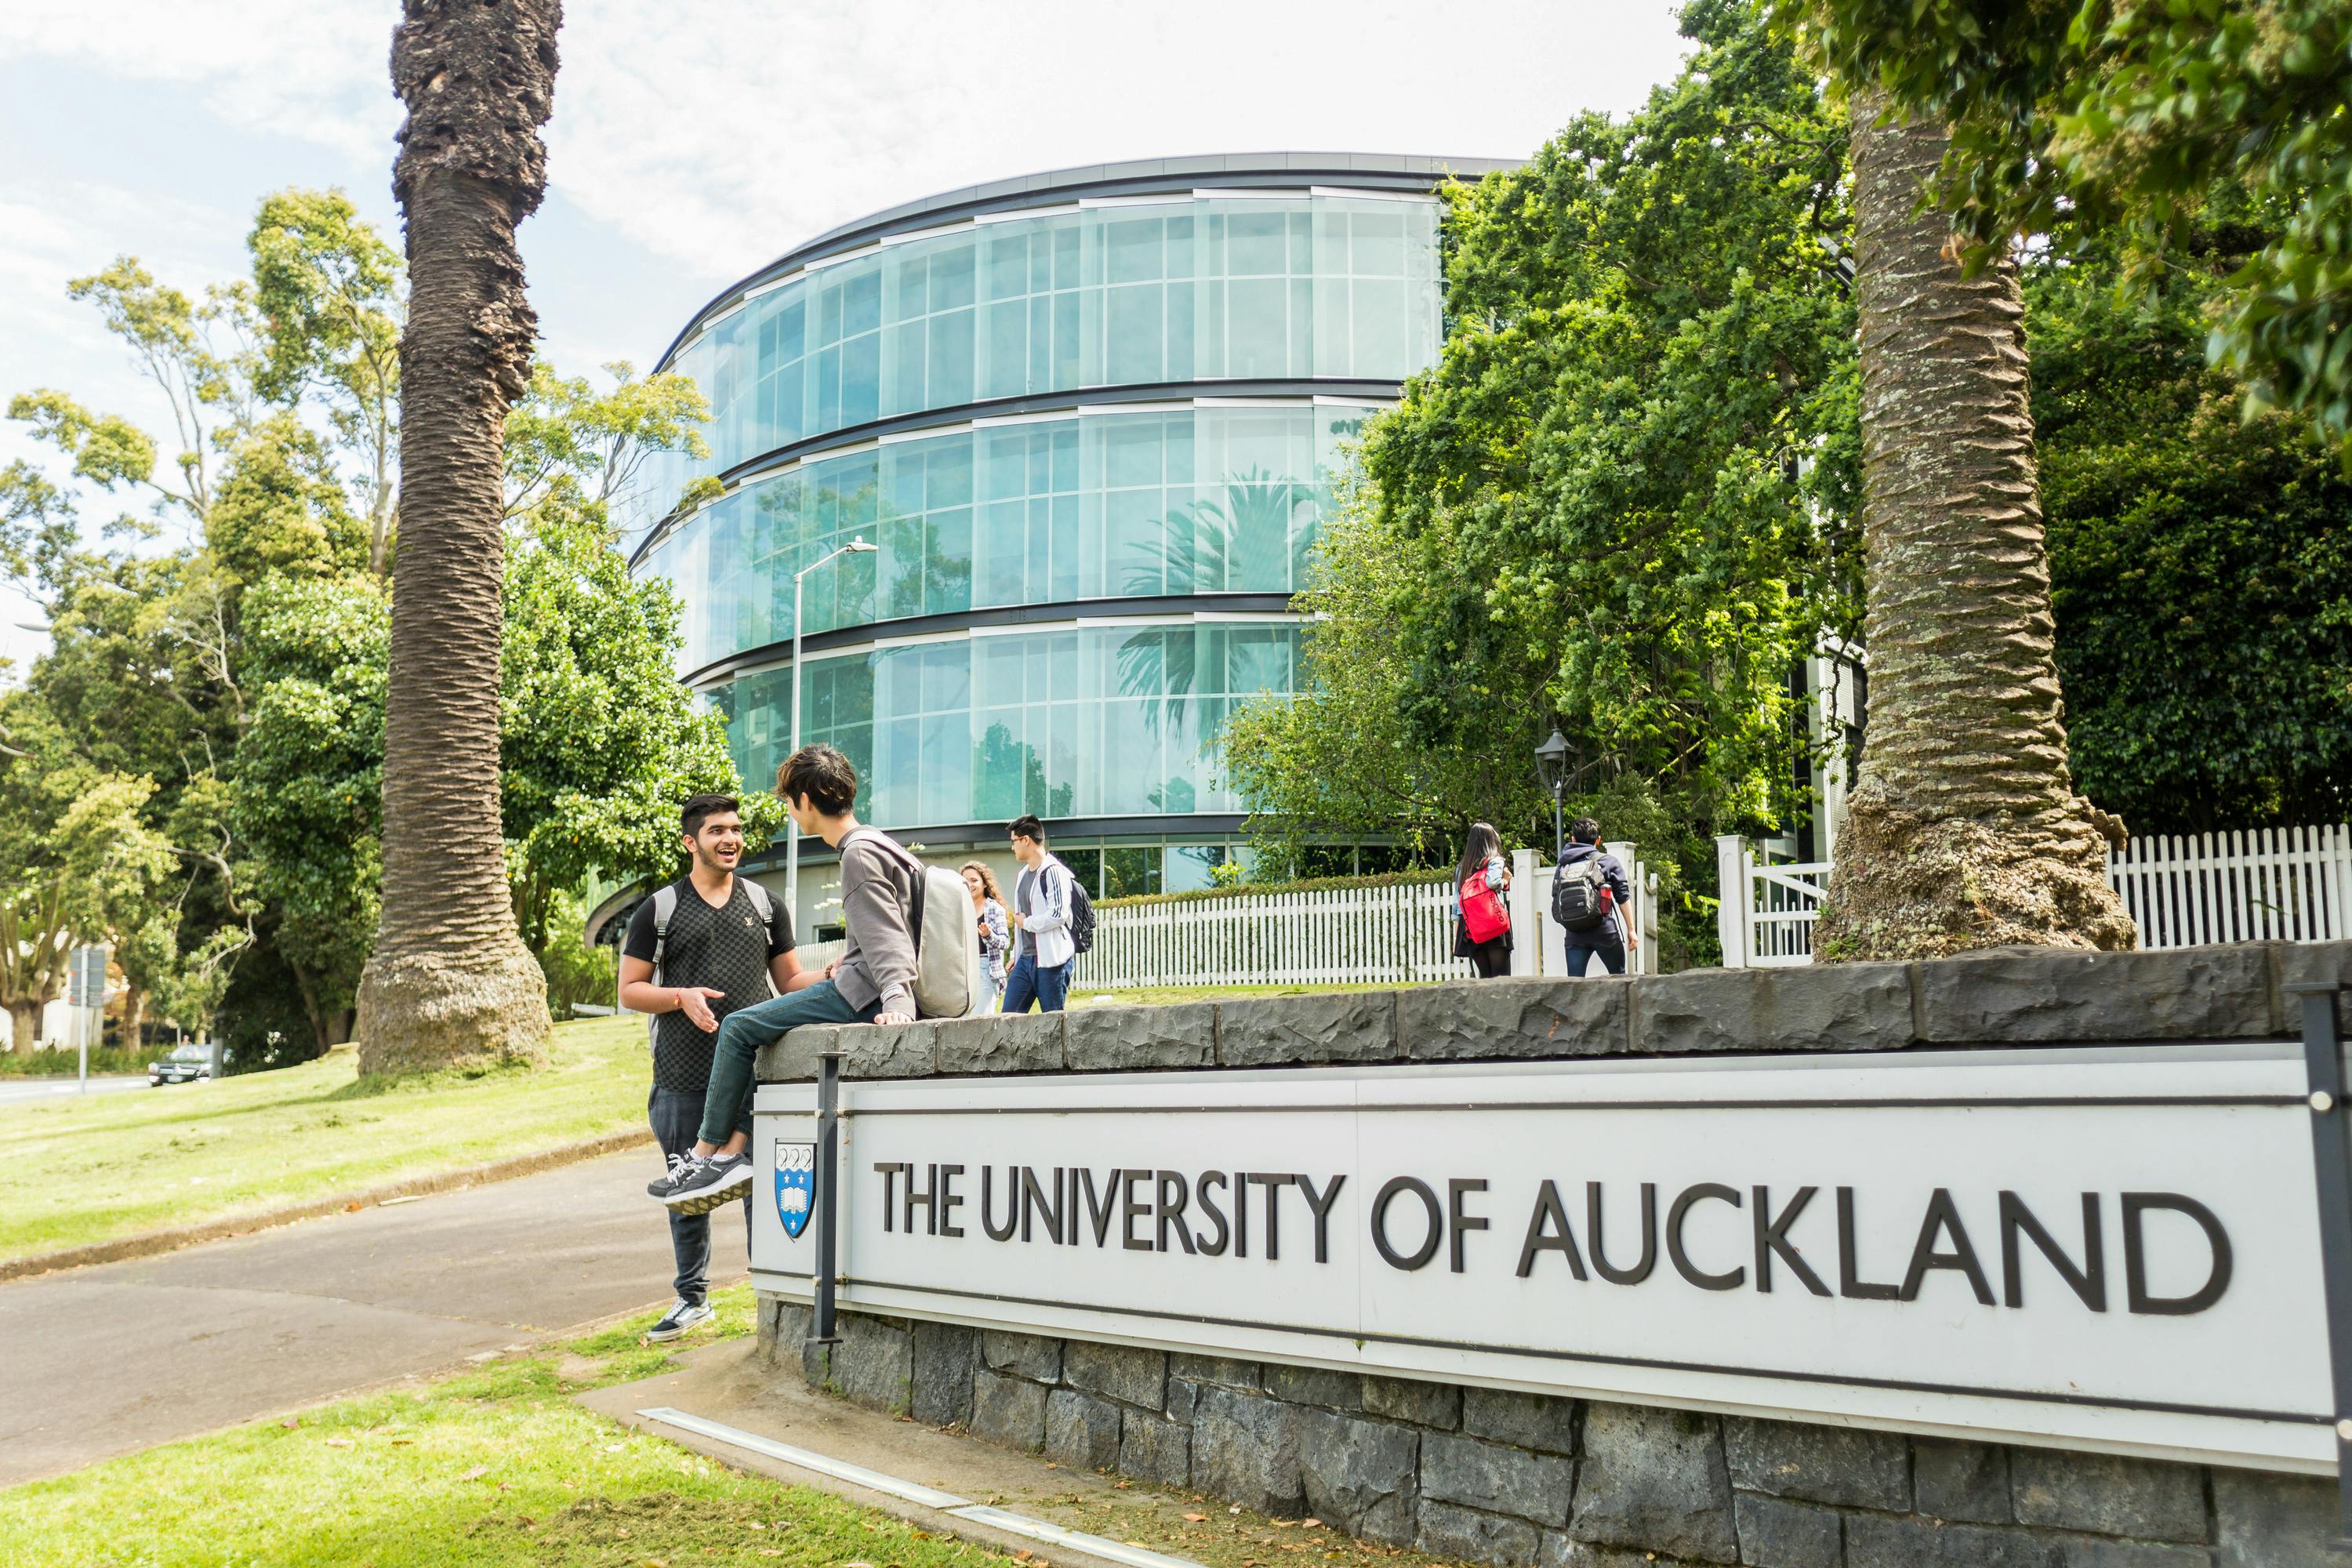 University of Auckland Scholarships 2023